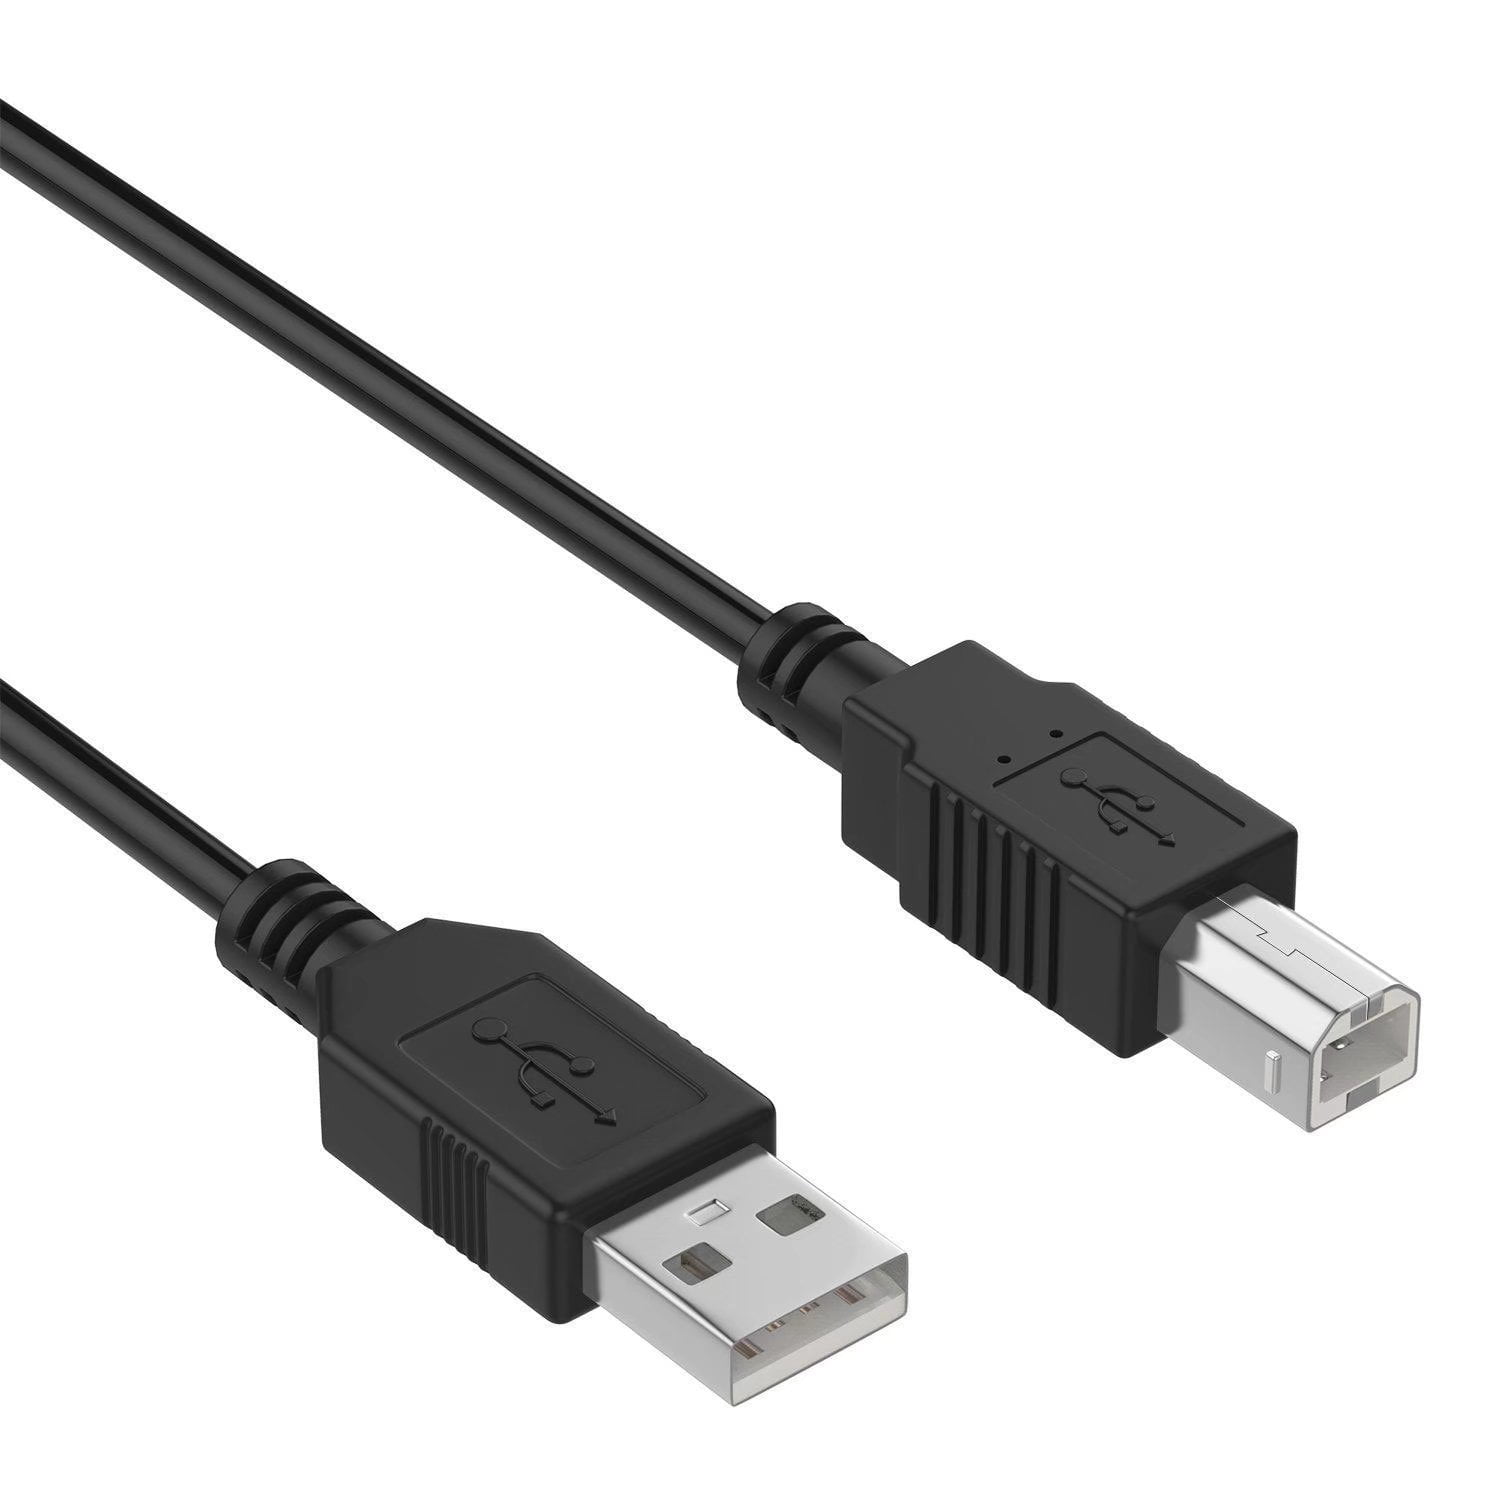 SLLEA USB Cable Data PC Cord for Plustek OpticFilm 7200 7200i 8100 Photo Slide & Film Scanner USB 2.0 Male A to Male B Data Sync Cord Lead Black 